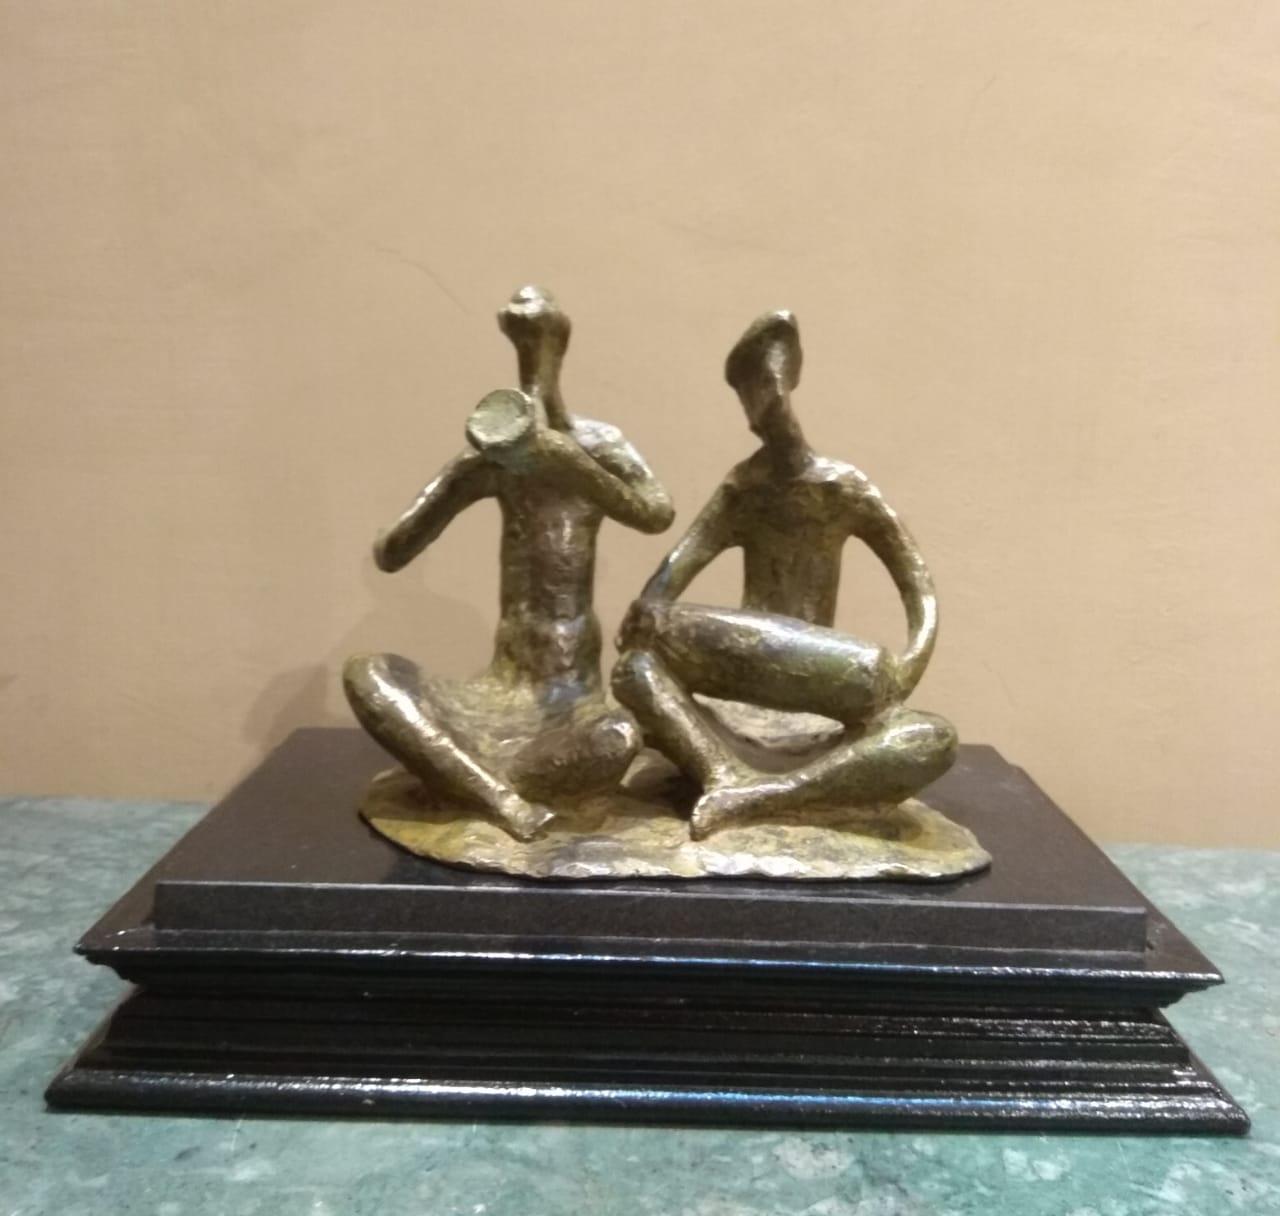 Musician-2, sculpture en bronze d'un artiste indien contemporain, en stock - Art de Tushar Kanti Das Roy